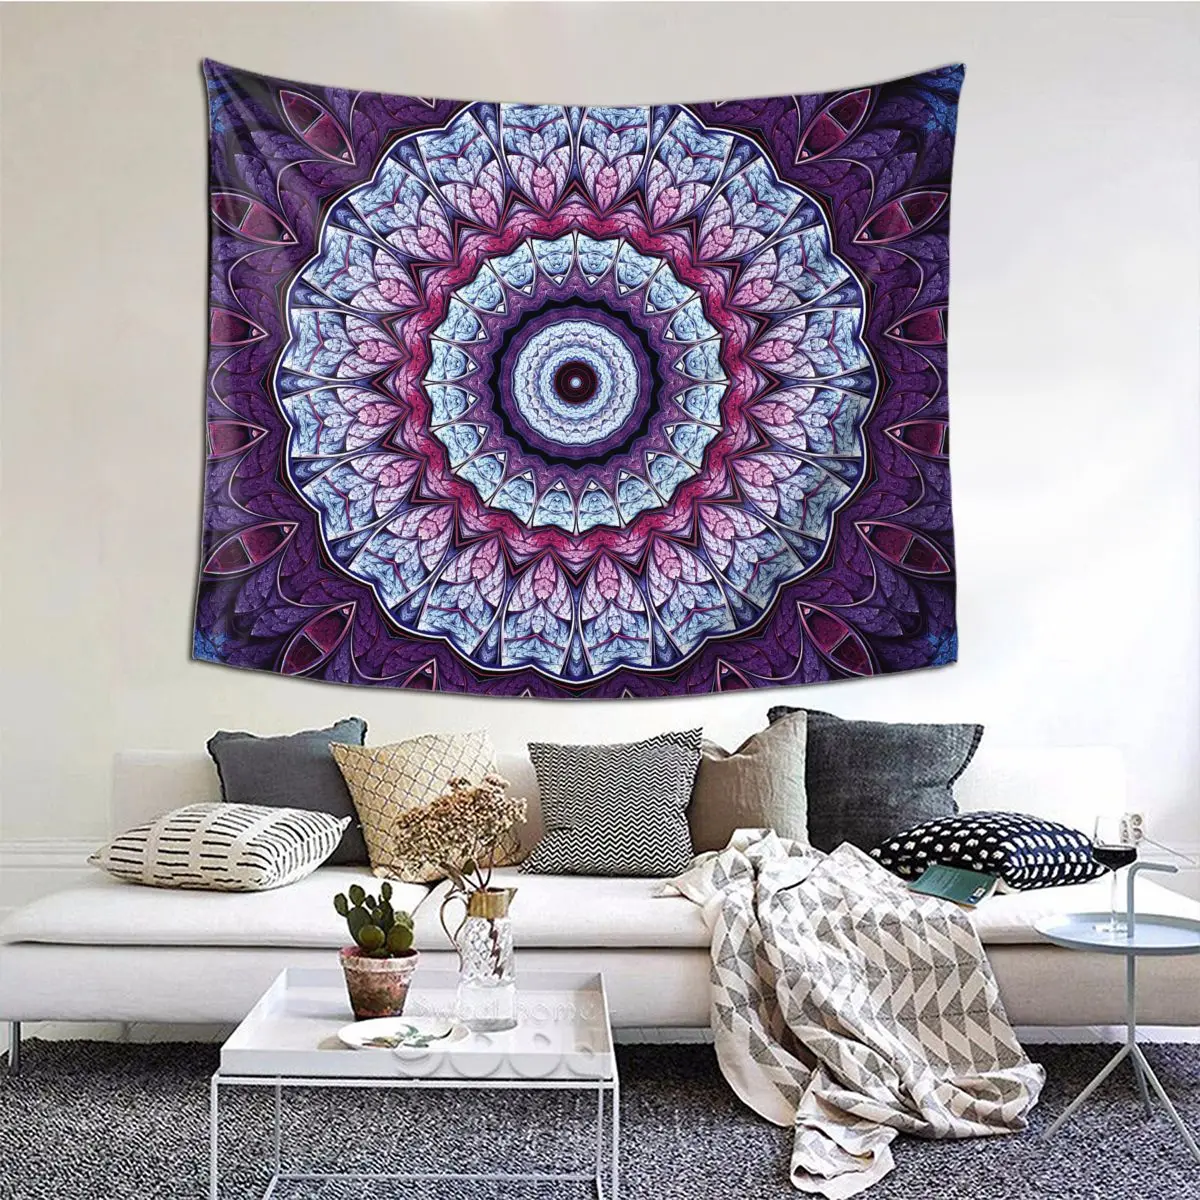 

Bohemian Mandala Eyes Tapestry Wall Hanging Hippie Polyester Tapestries Boho Psychedelic Blanket Fantasy Dorm Decor Gift Idea